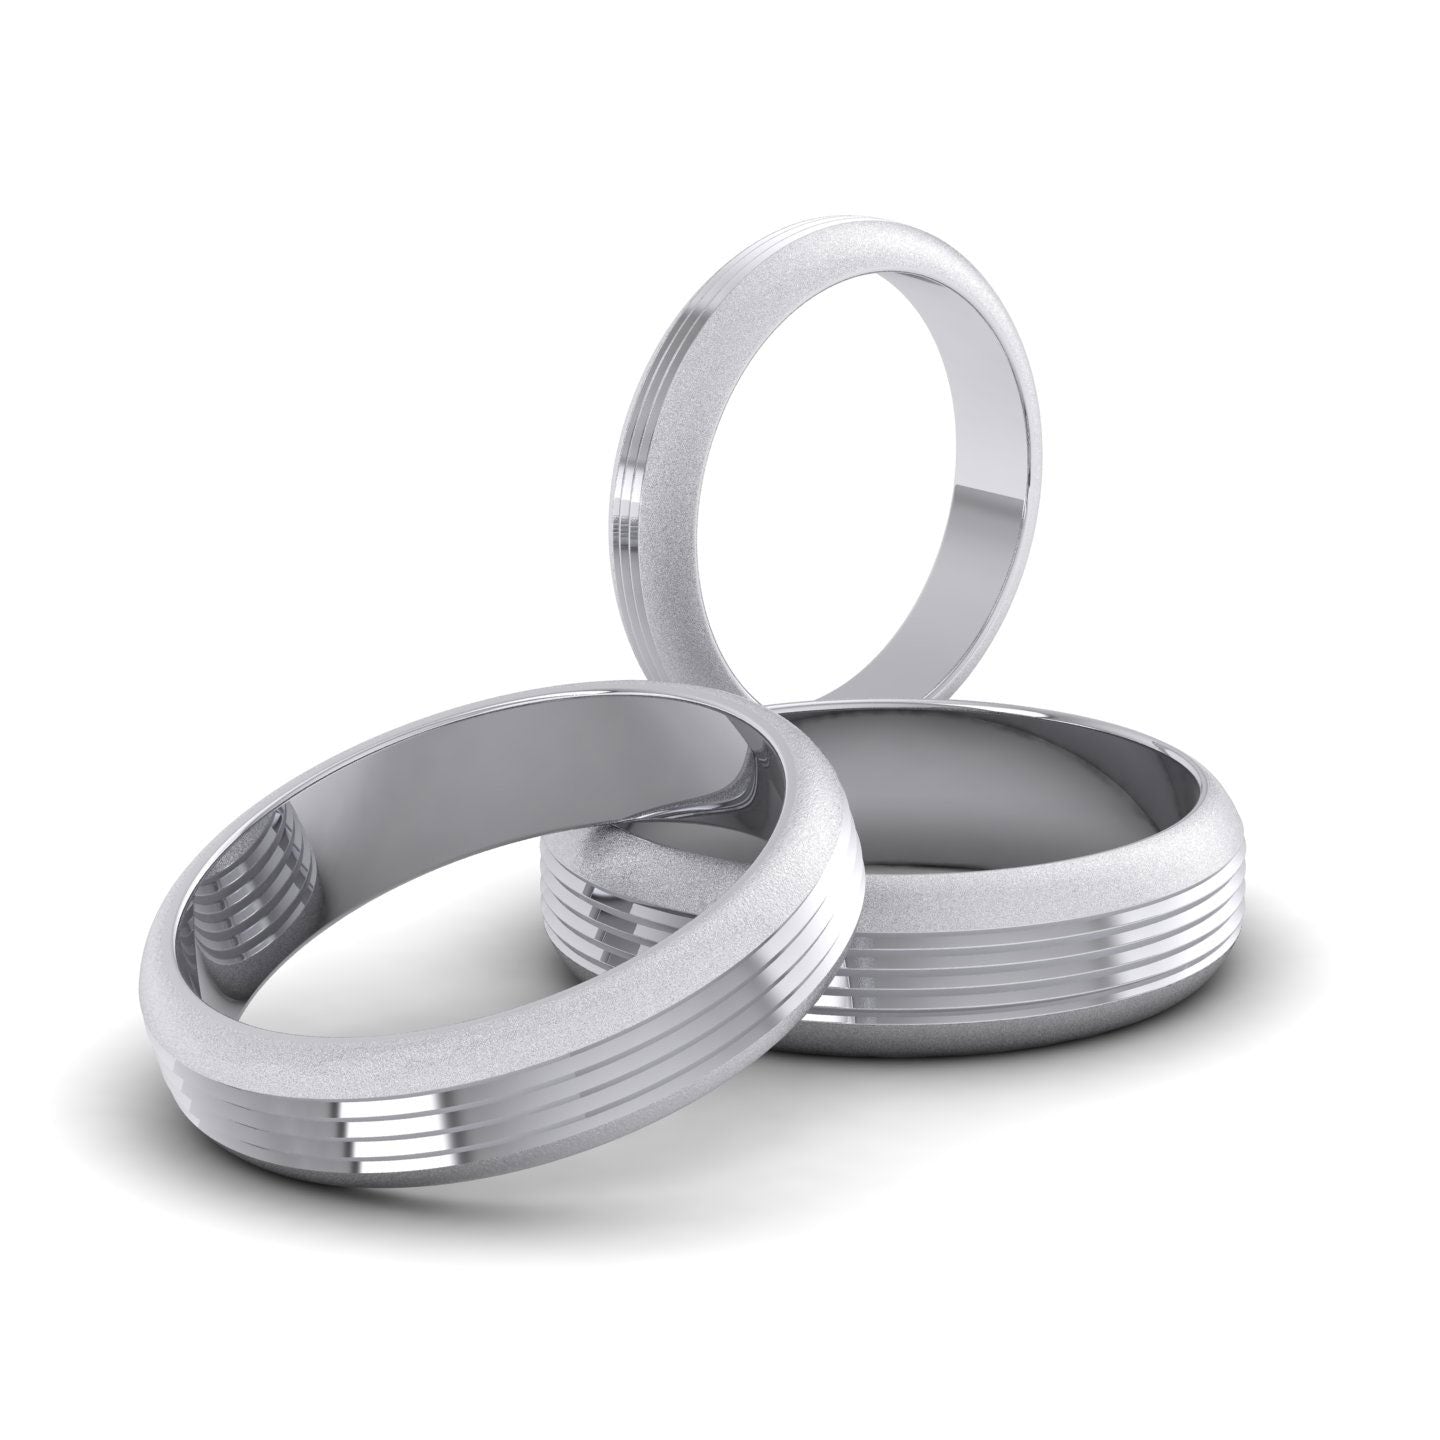 Grooved Pattern 950 Platinum 6mm Wedding Ring